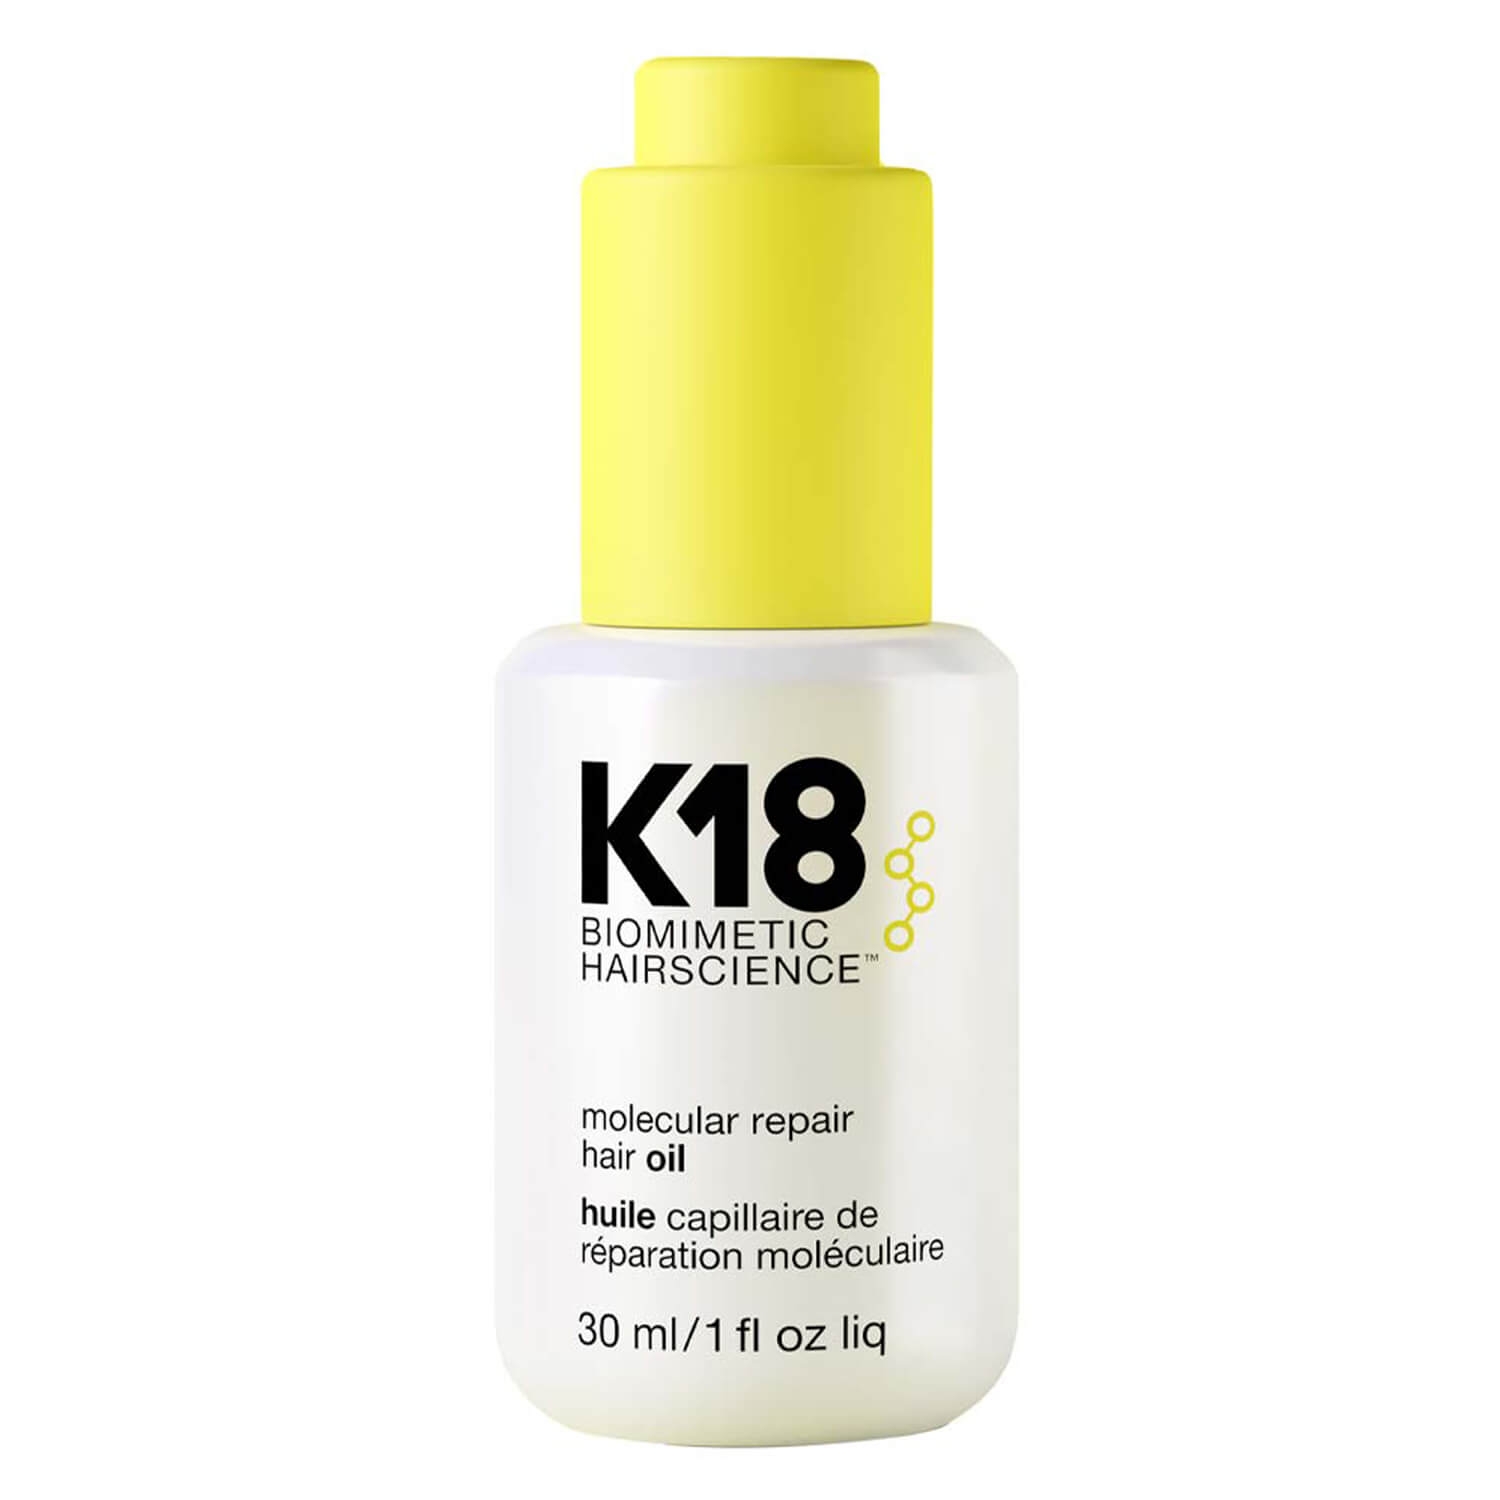 Product image from K18 Biomimetic Hairscience - molecular repair hair oil